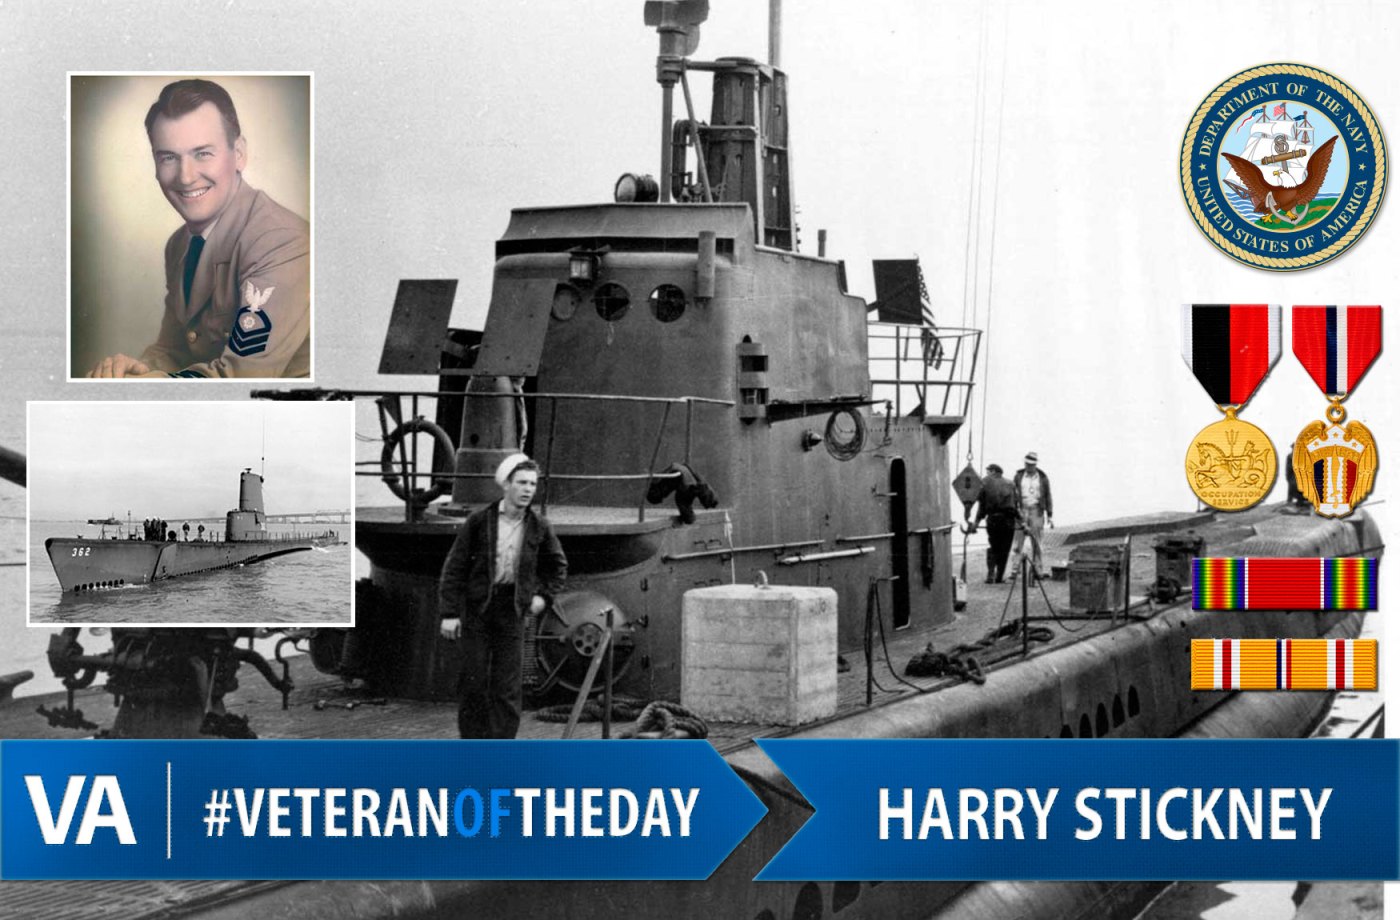 Veteran of the day Harry Stickney